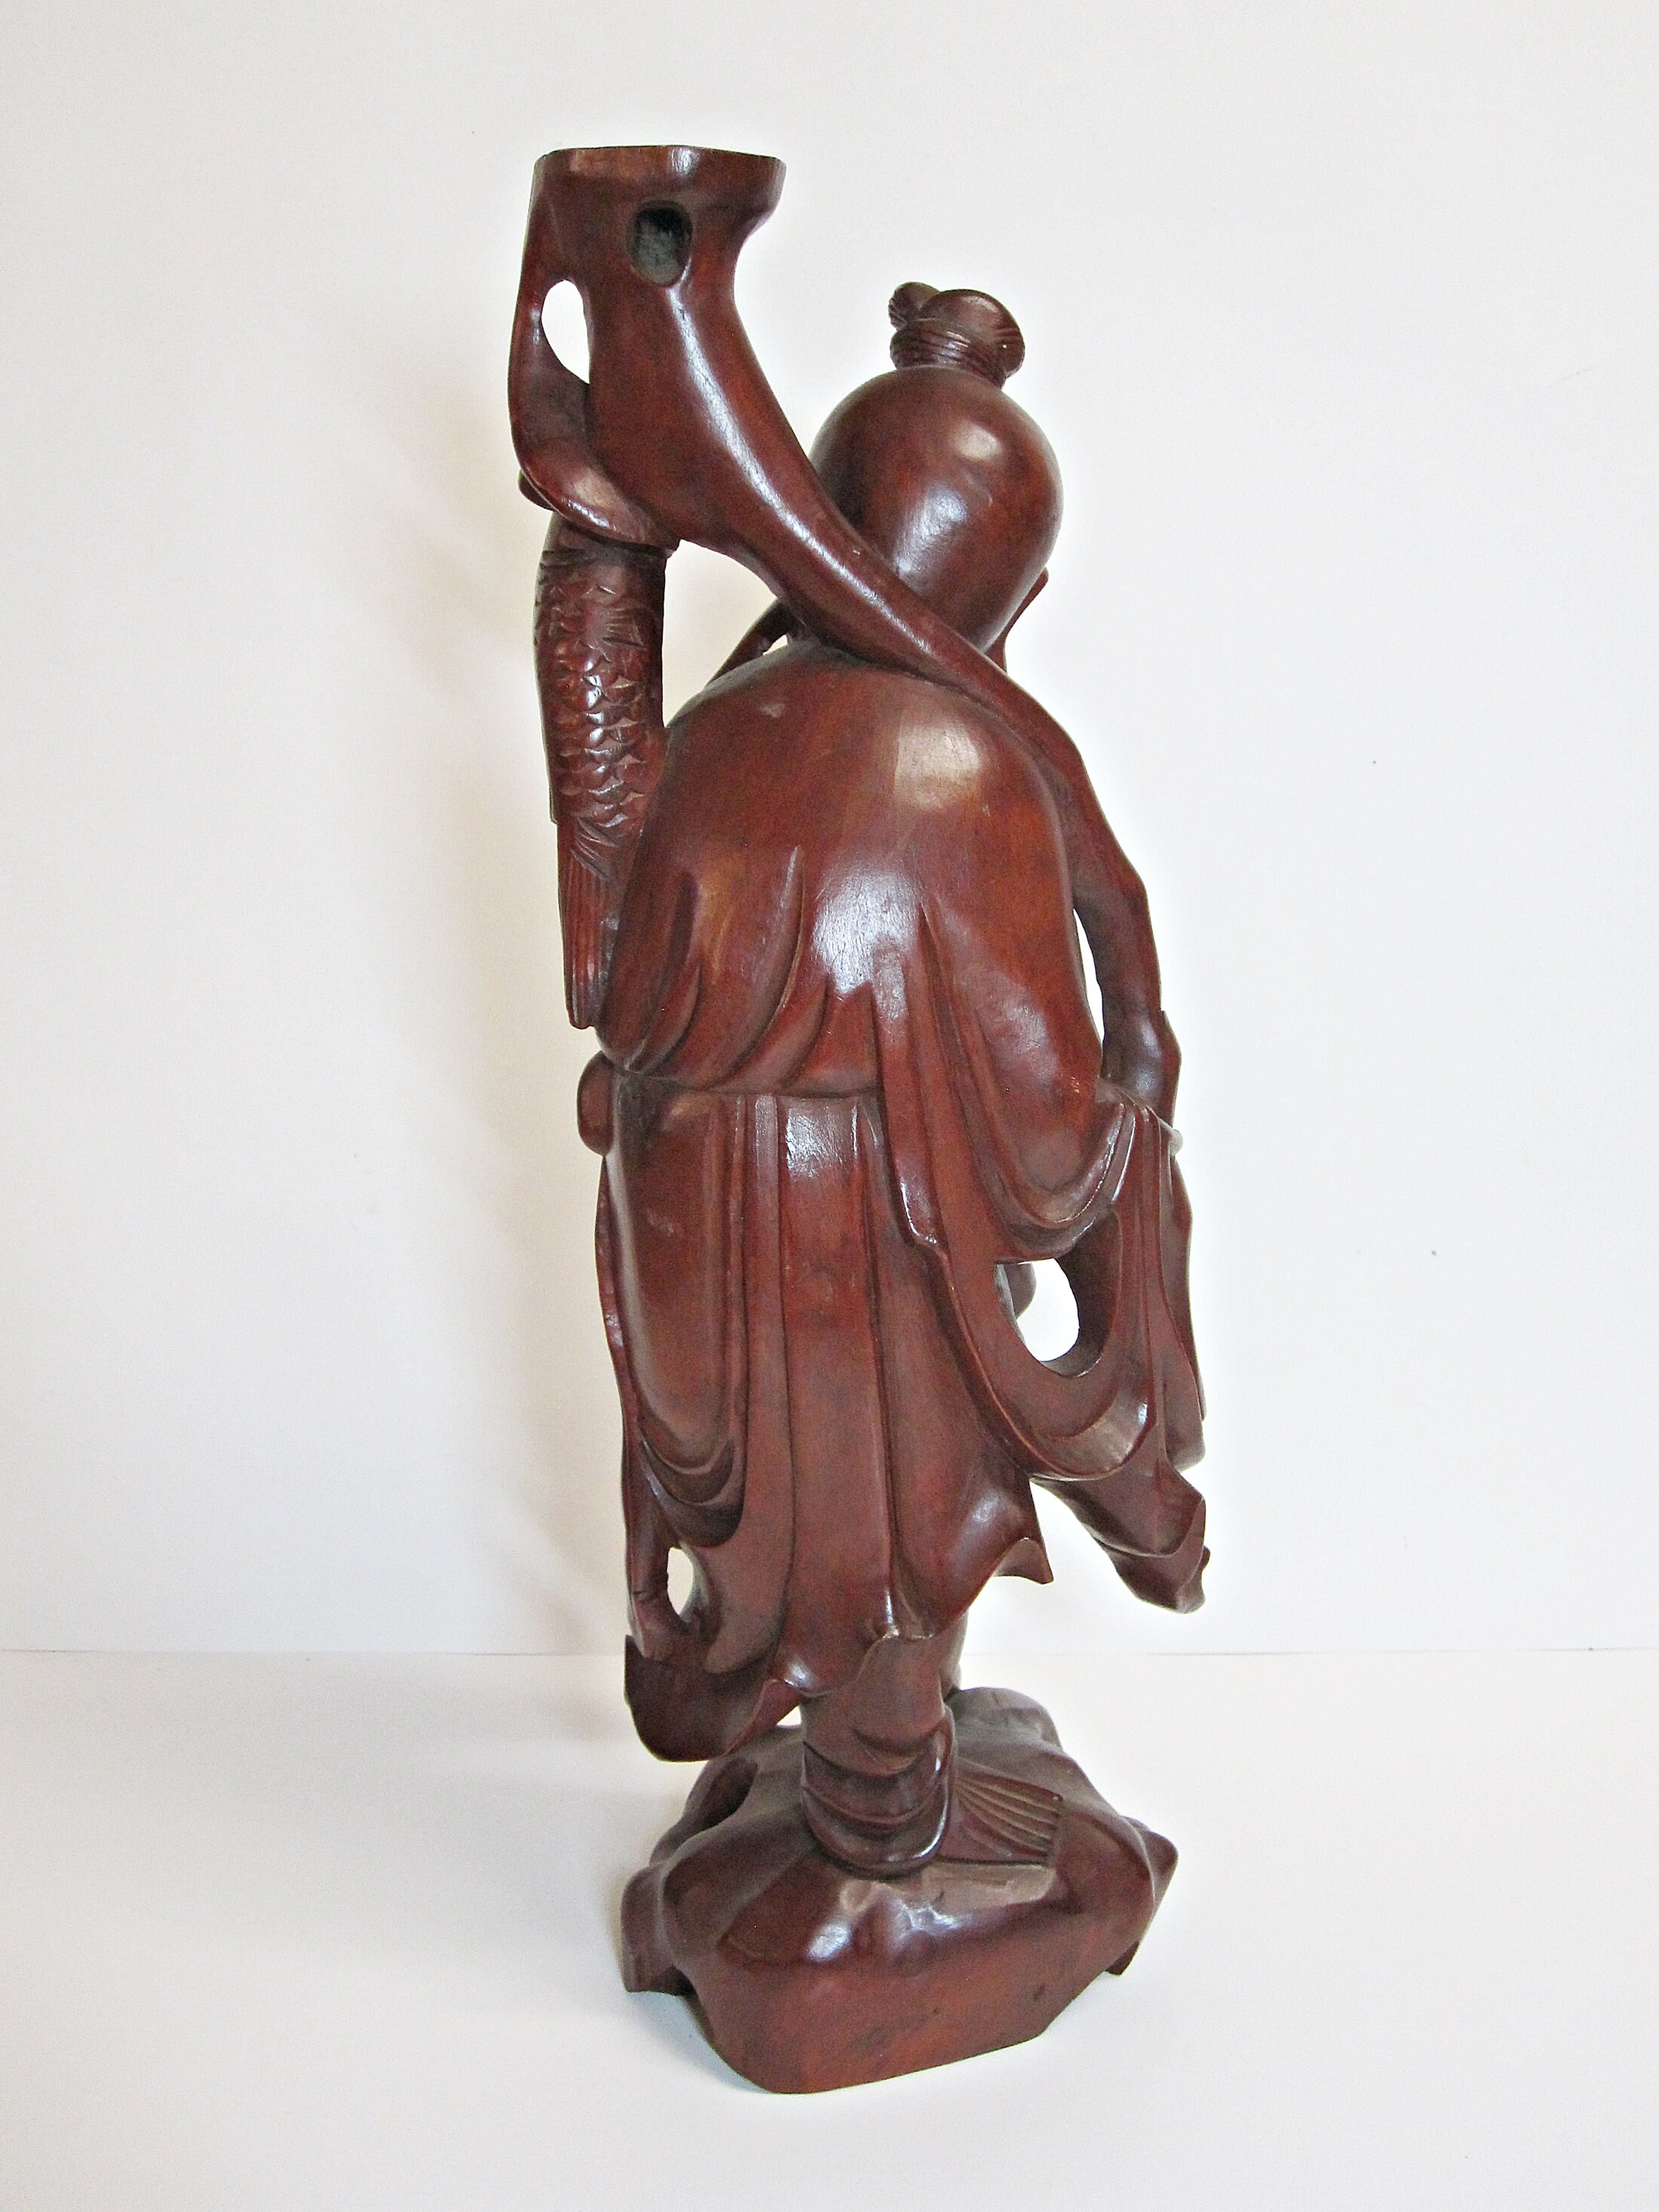 Details about   Chinese vintage Victorian oriental antique large fisherman figurine D 